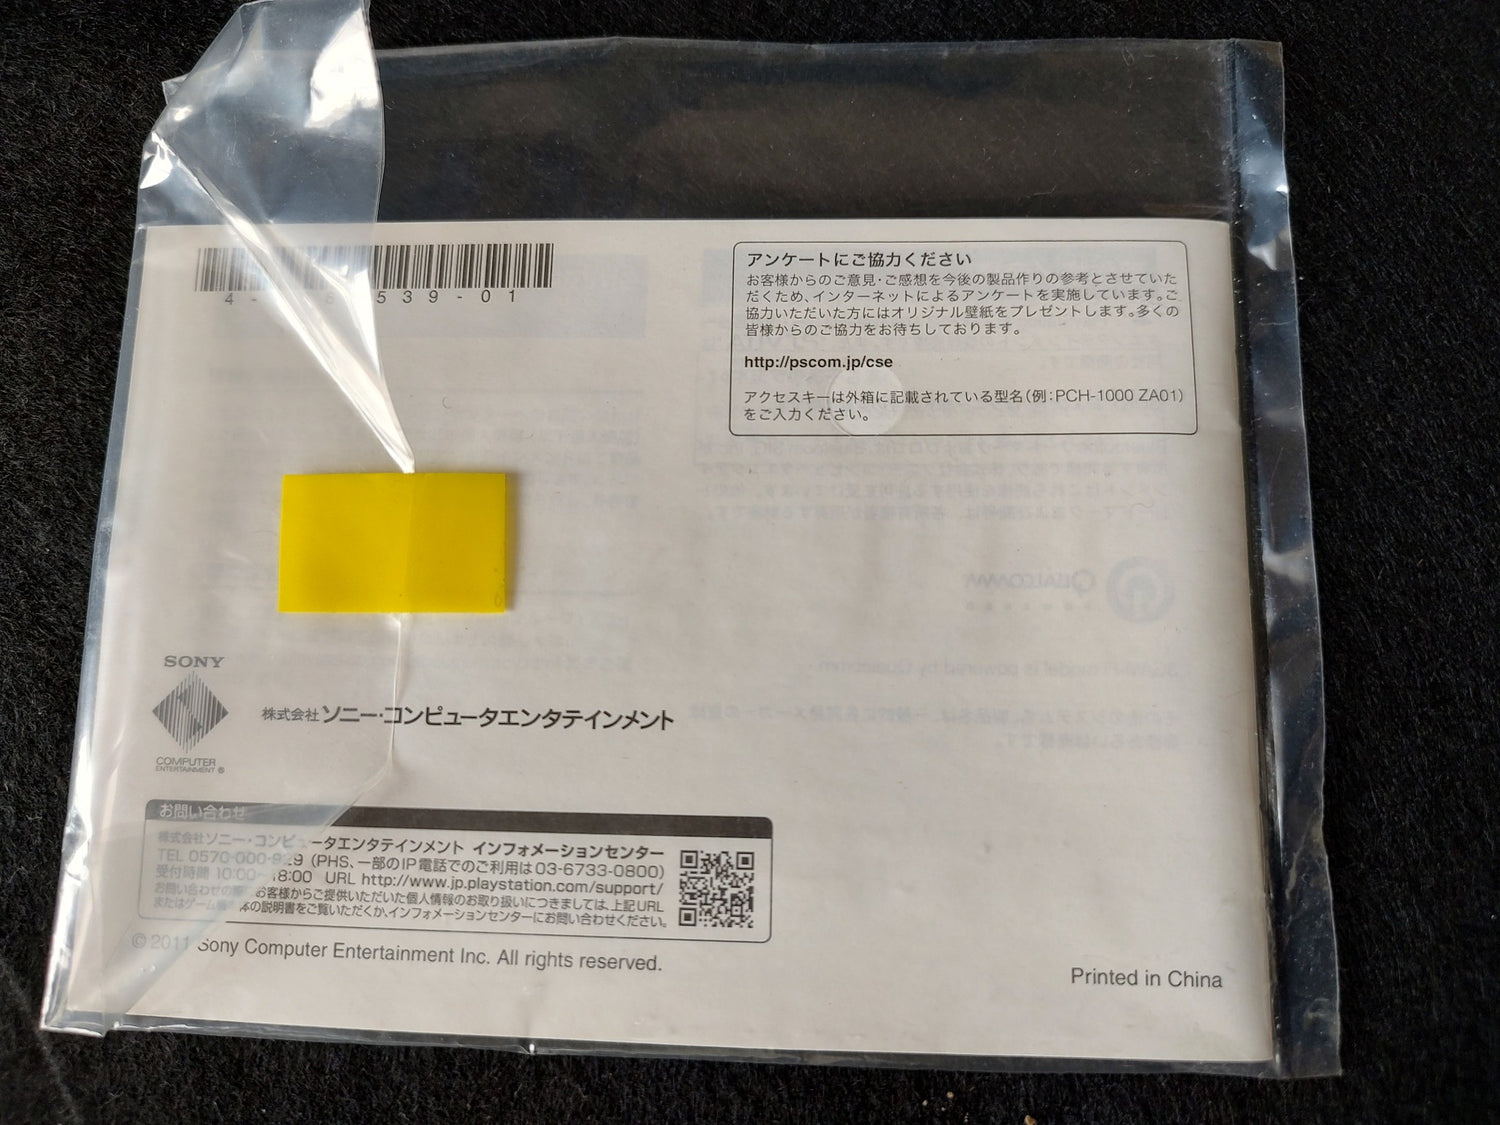 SONY PS Vita PCH-1100 Black Console, w/Manual Box set, Working